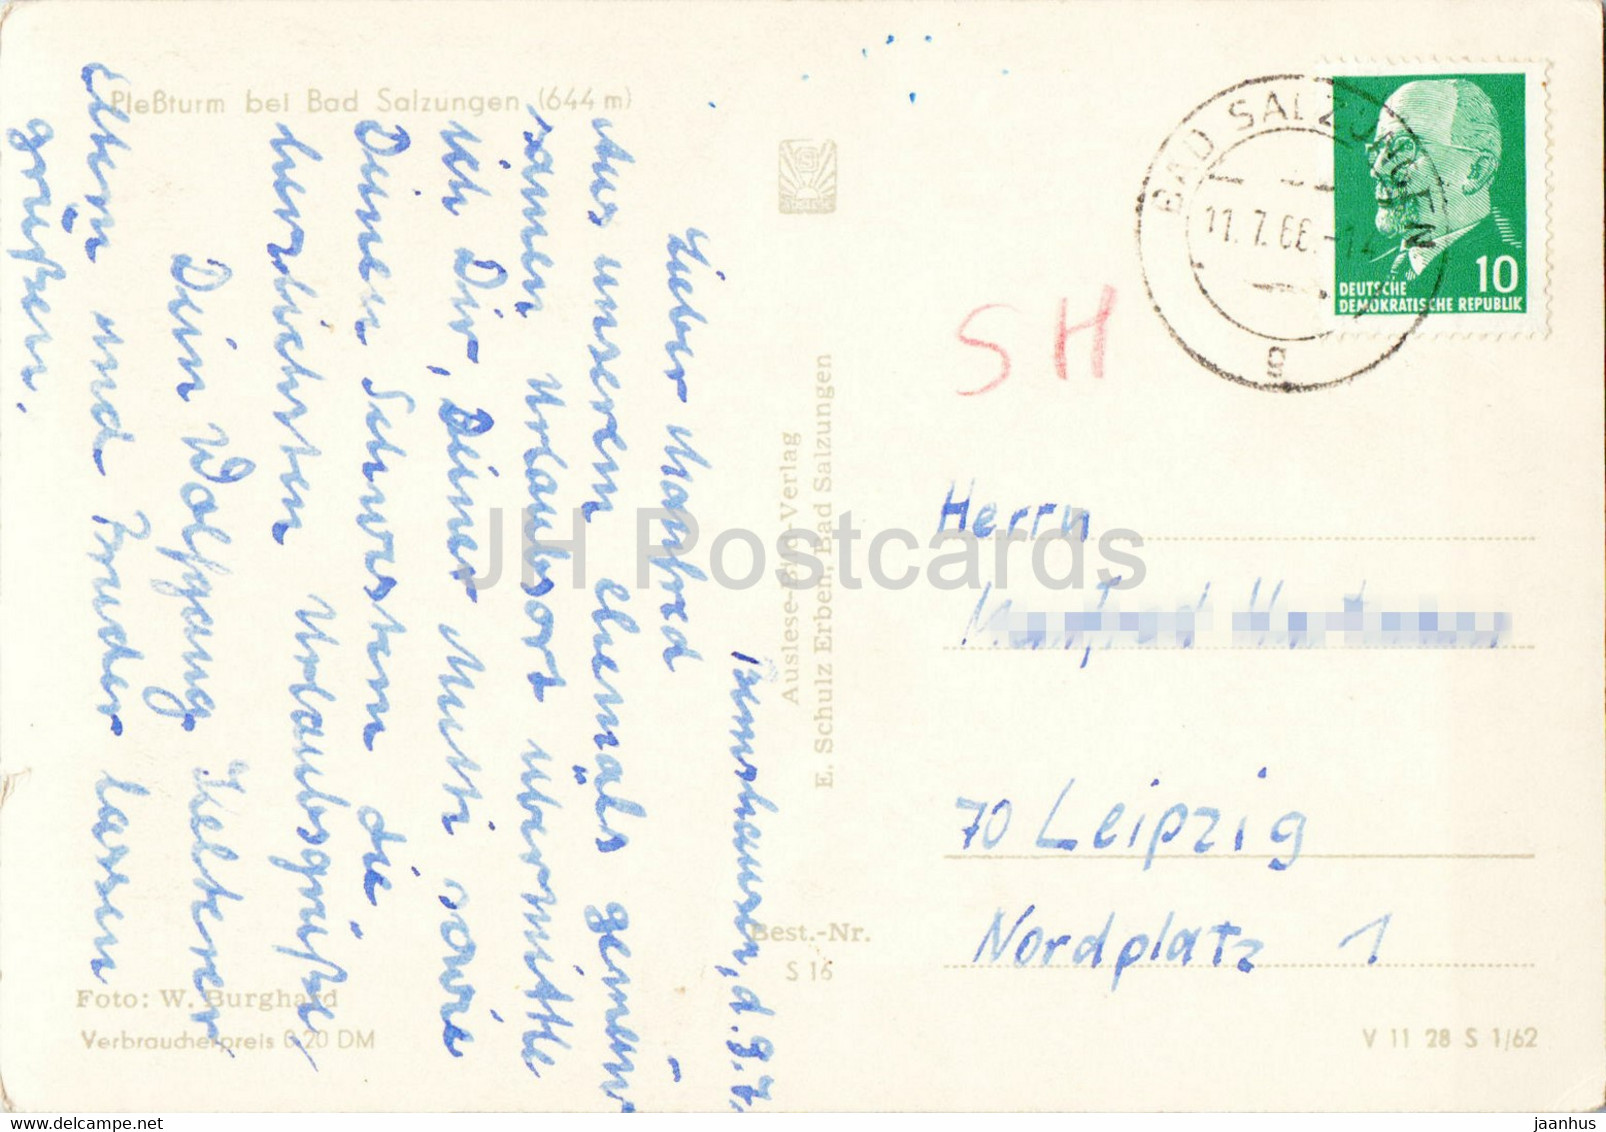 Plessturm Bei Bad Salzungen 644 M - Old Postcard - 1966 - Germany DDR - Used - Bad Salzungen